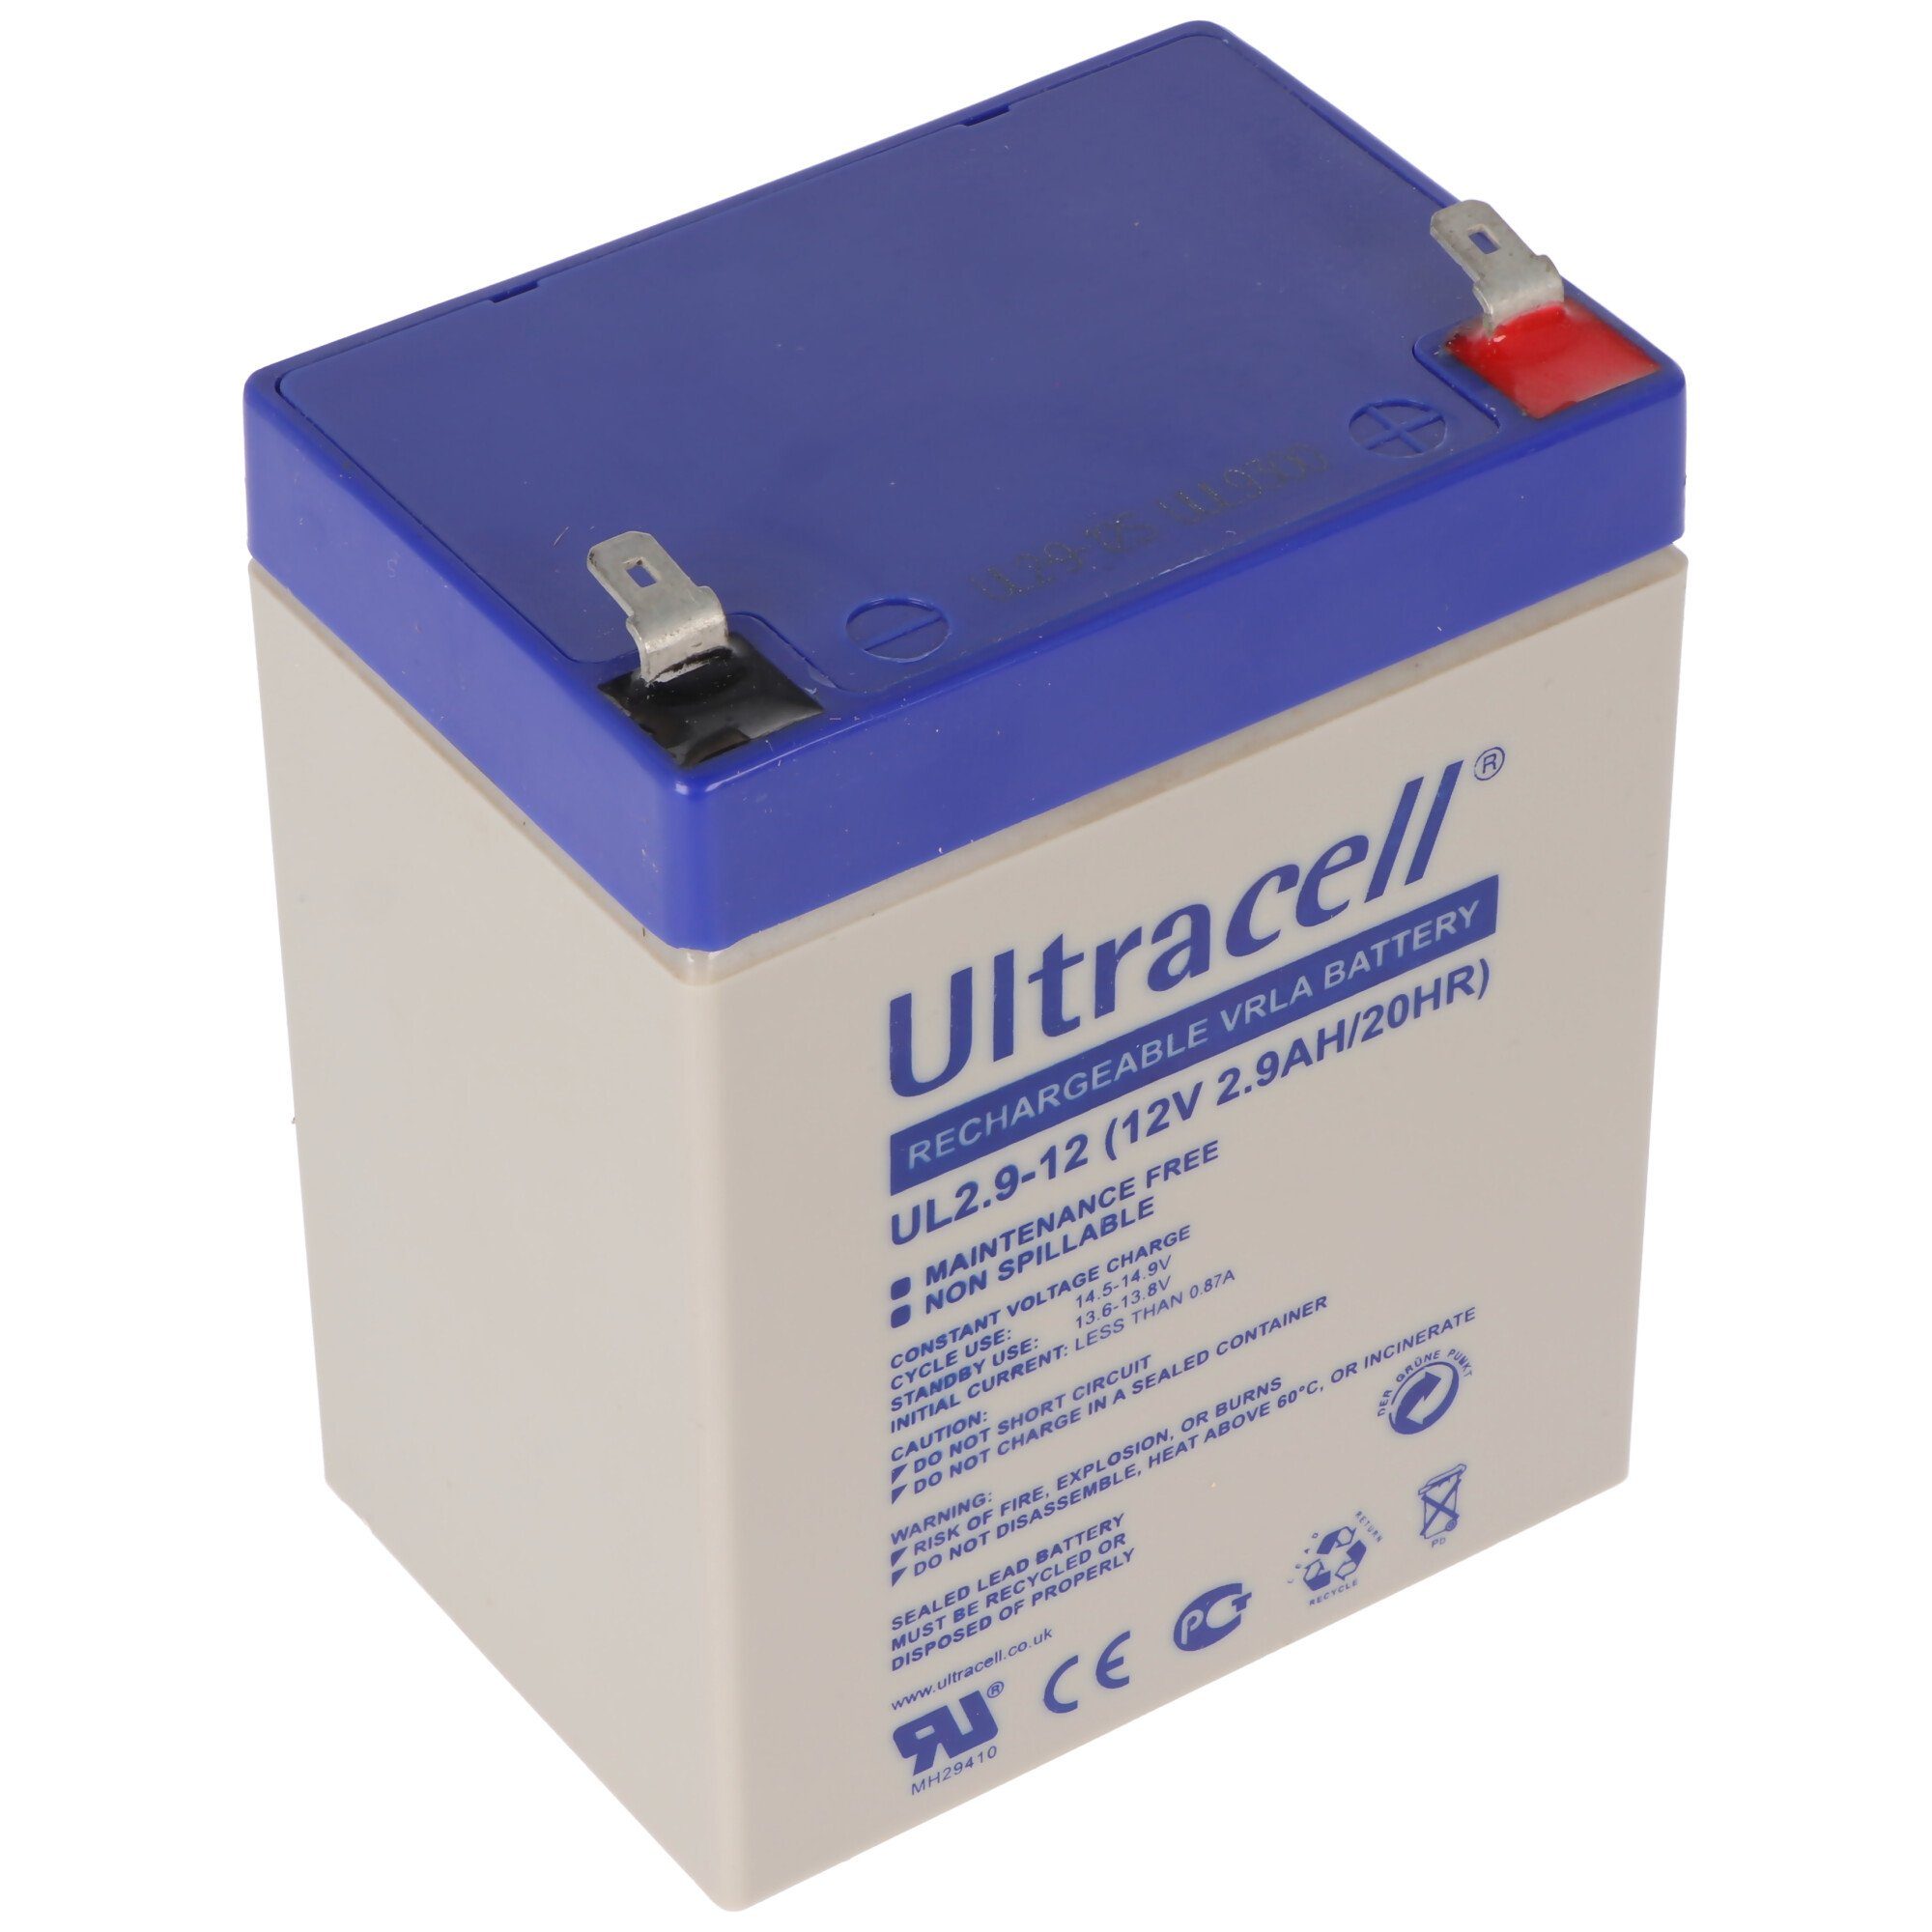 Ultracell Ultracell UL2.9-12 12V 2,9Ah Bleiakku AGM Blei Gel Akku 4,8mm Steckko Akku